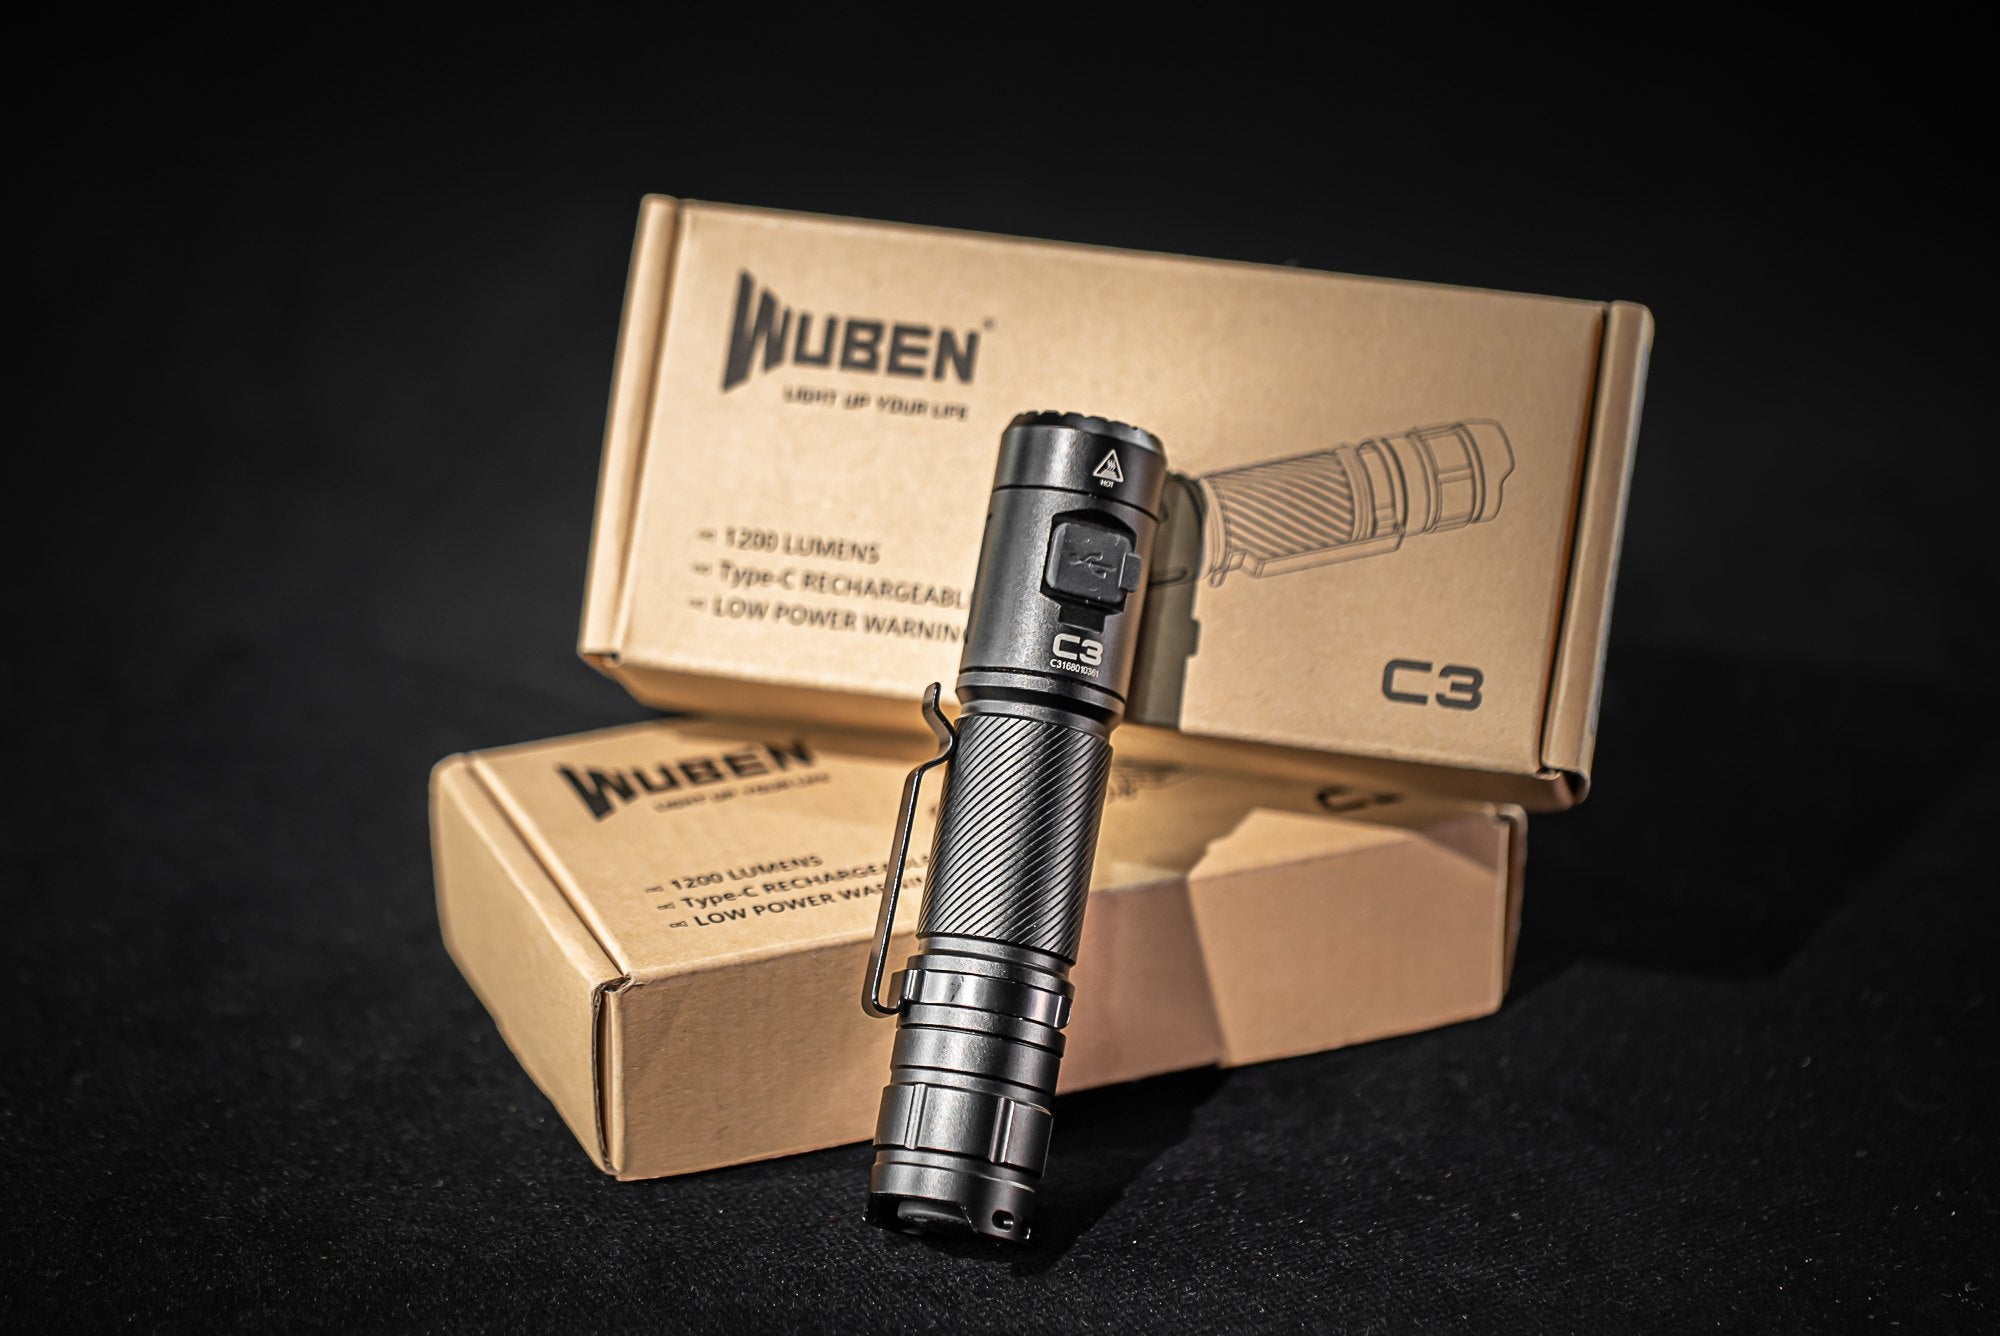 Reasons to choose Wuben C3 1200 Lumens Flashlight